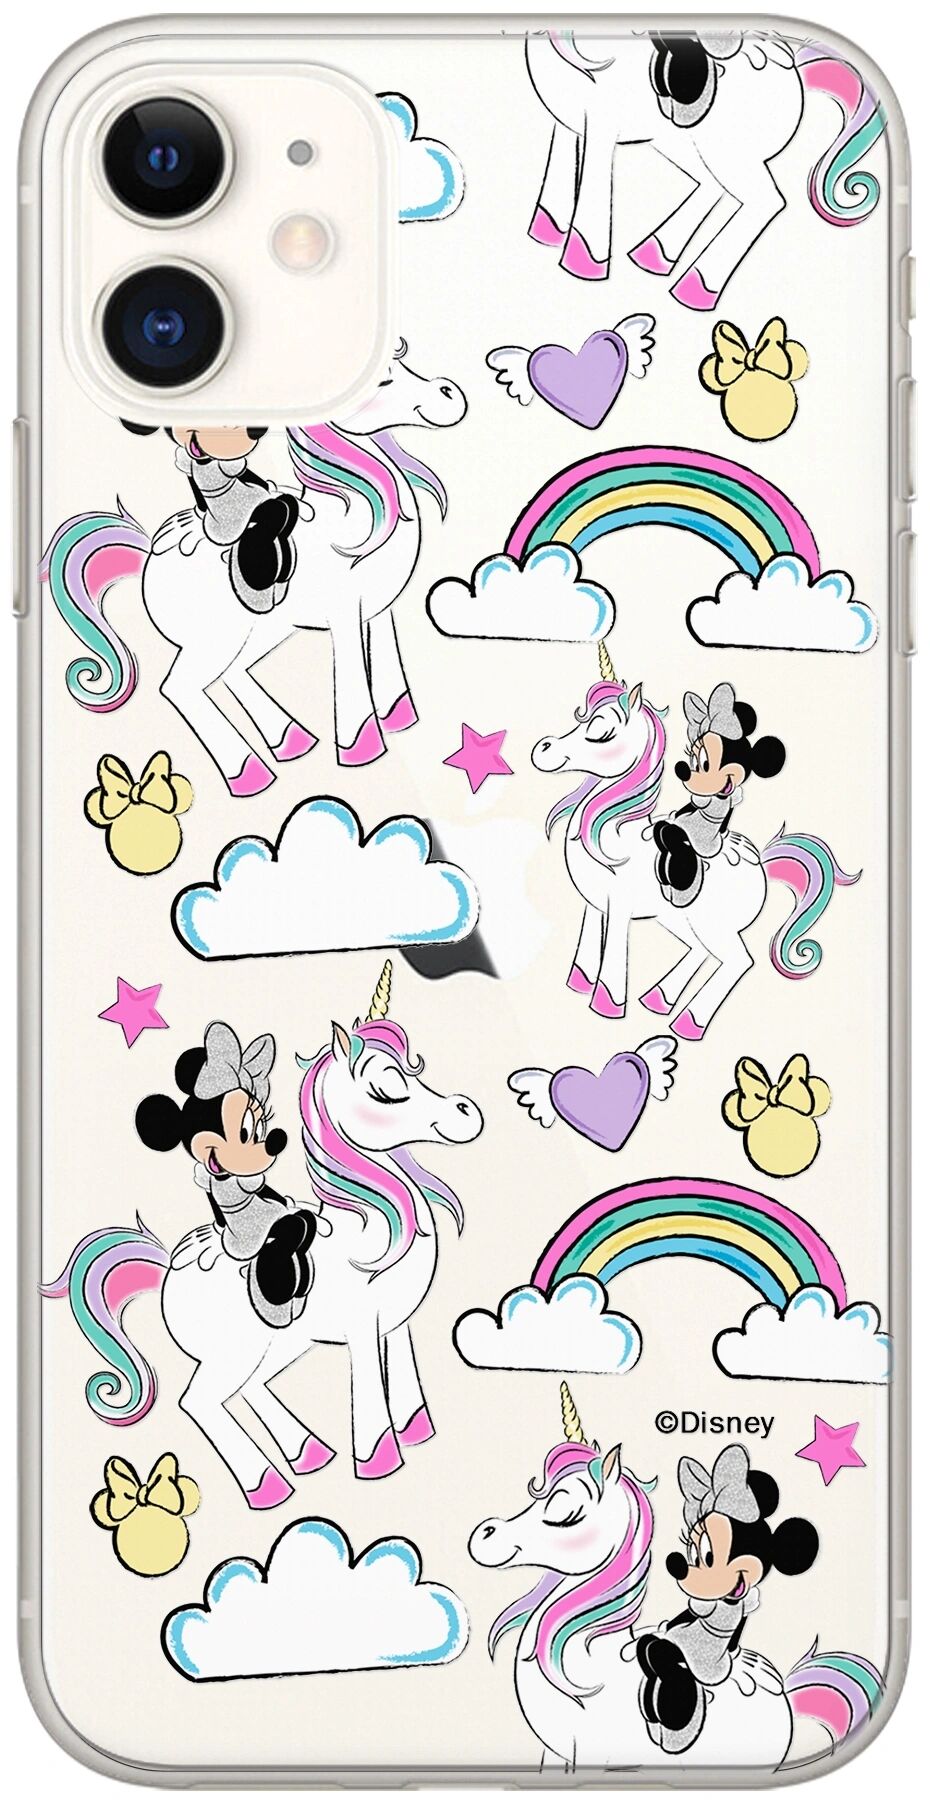 Ert Ochranný kryt pro iPhone 6 / 6S - Disney, Minnie 037